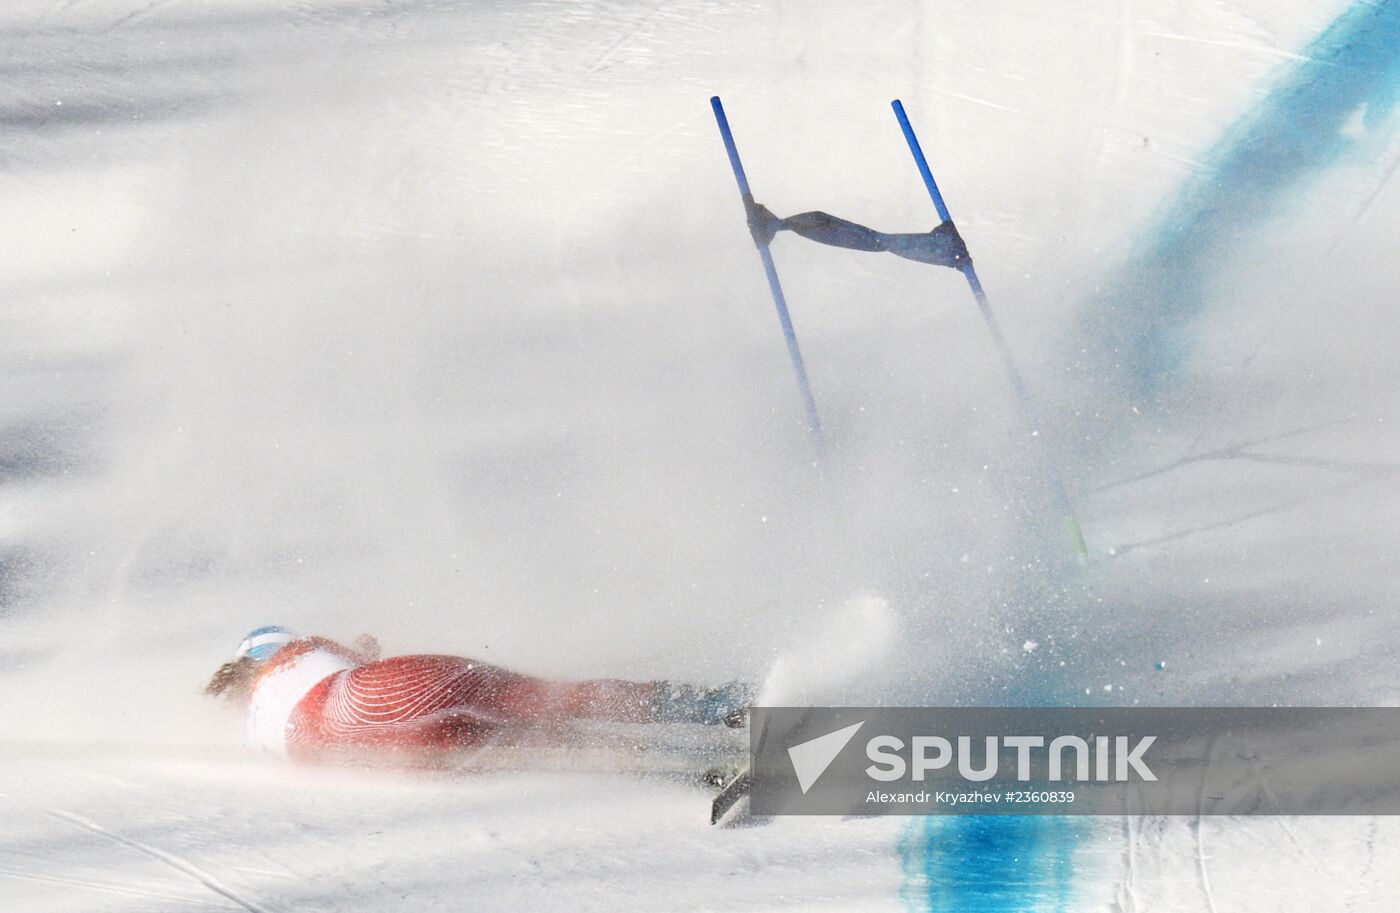 2014 Winter Olympics. Alpine skiing. Training sessions